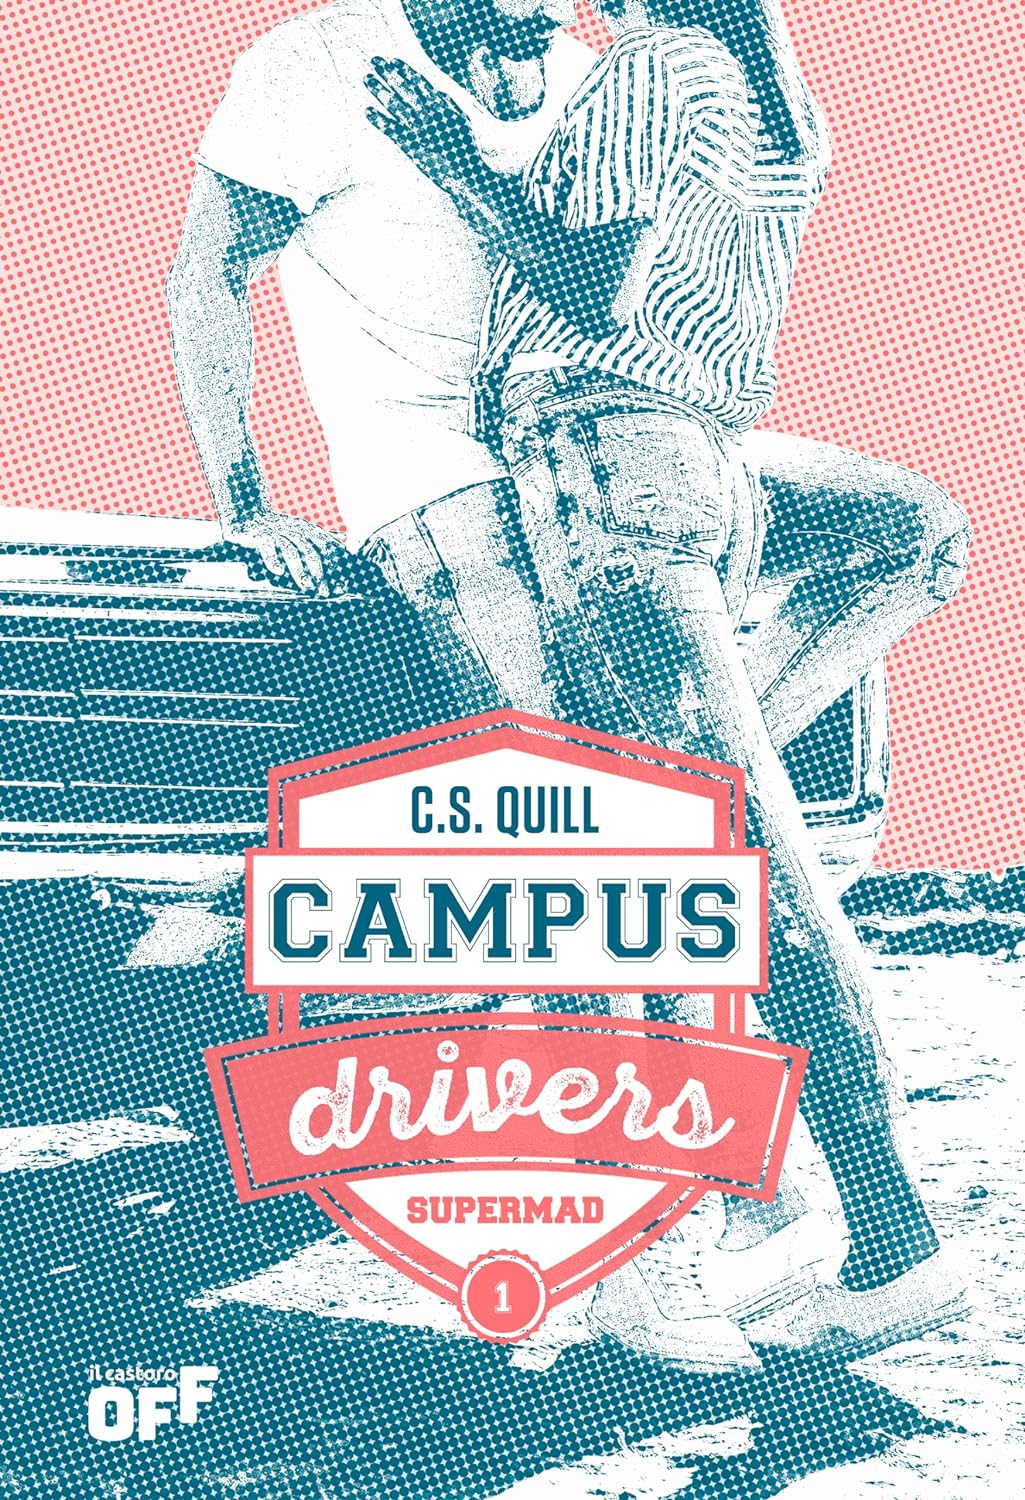 Campus drivers - Supermad (Vol. 1)